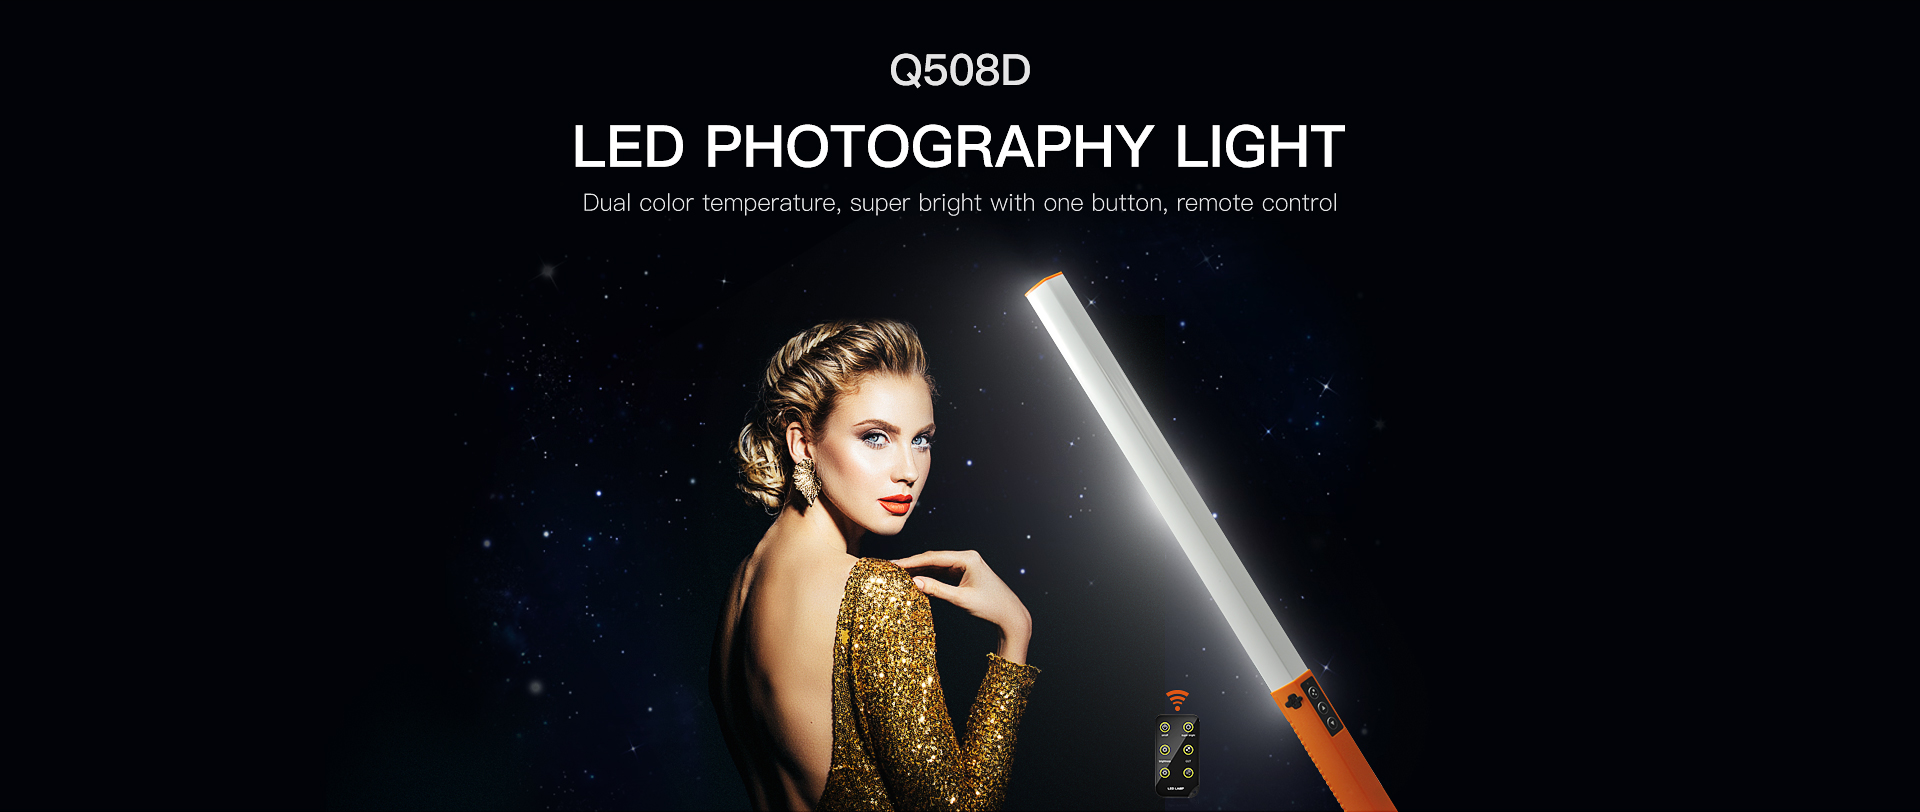 Q508D LED photography light